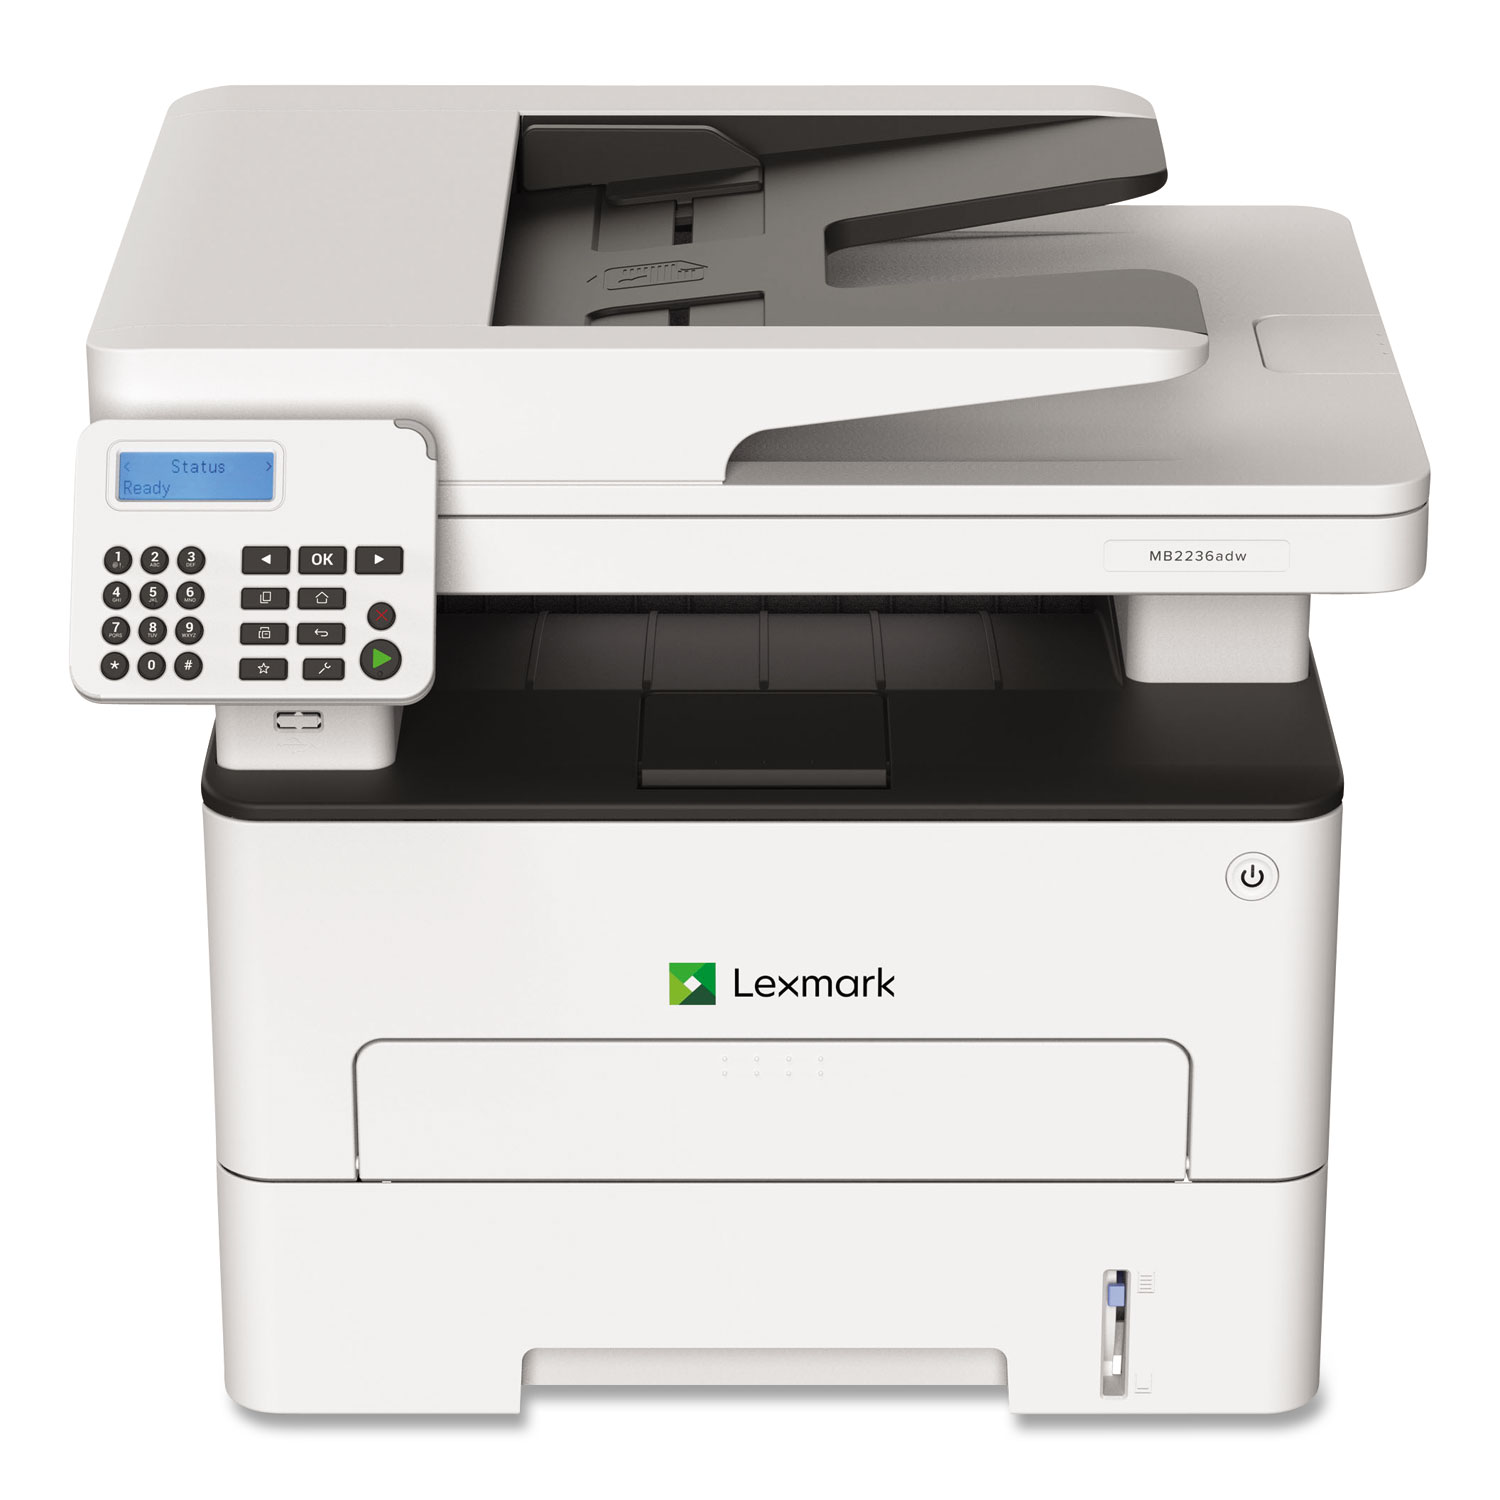  Lexmark 18M0400 MB2236adw Laser Multifunction Printer, Copy/Fax/Print/Scan (LEX18M0400) 